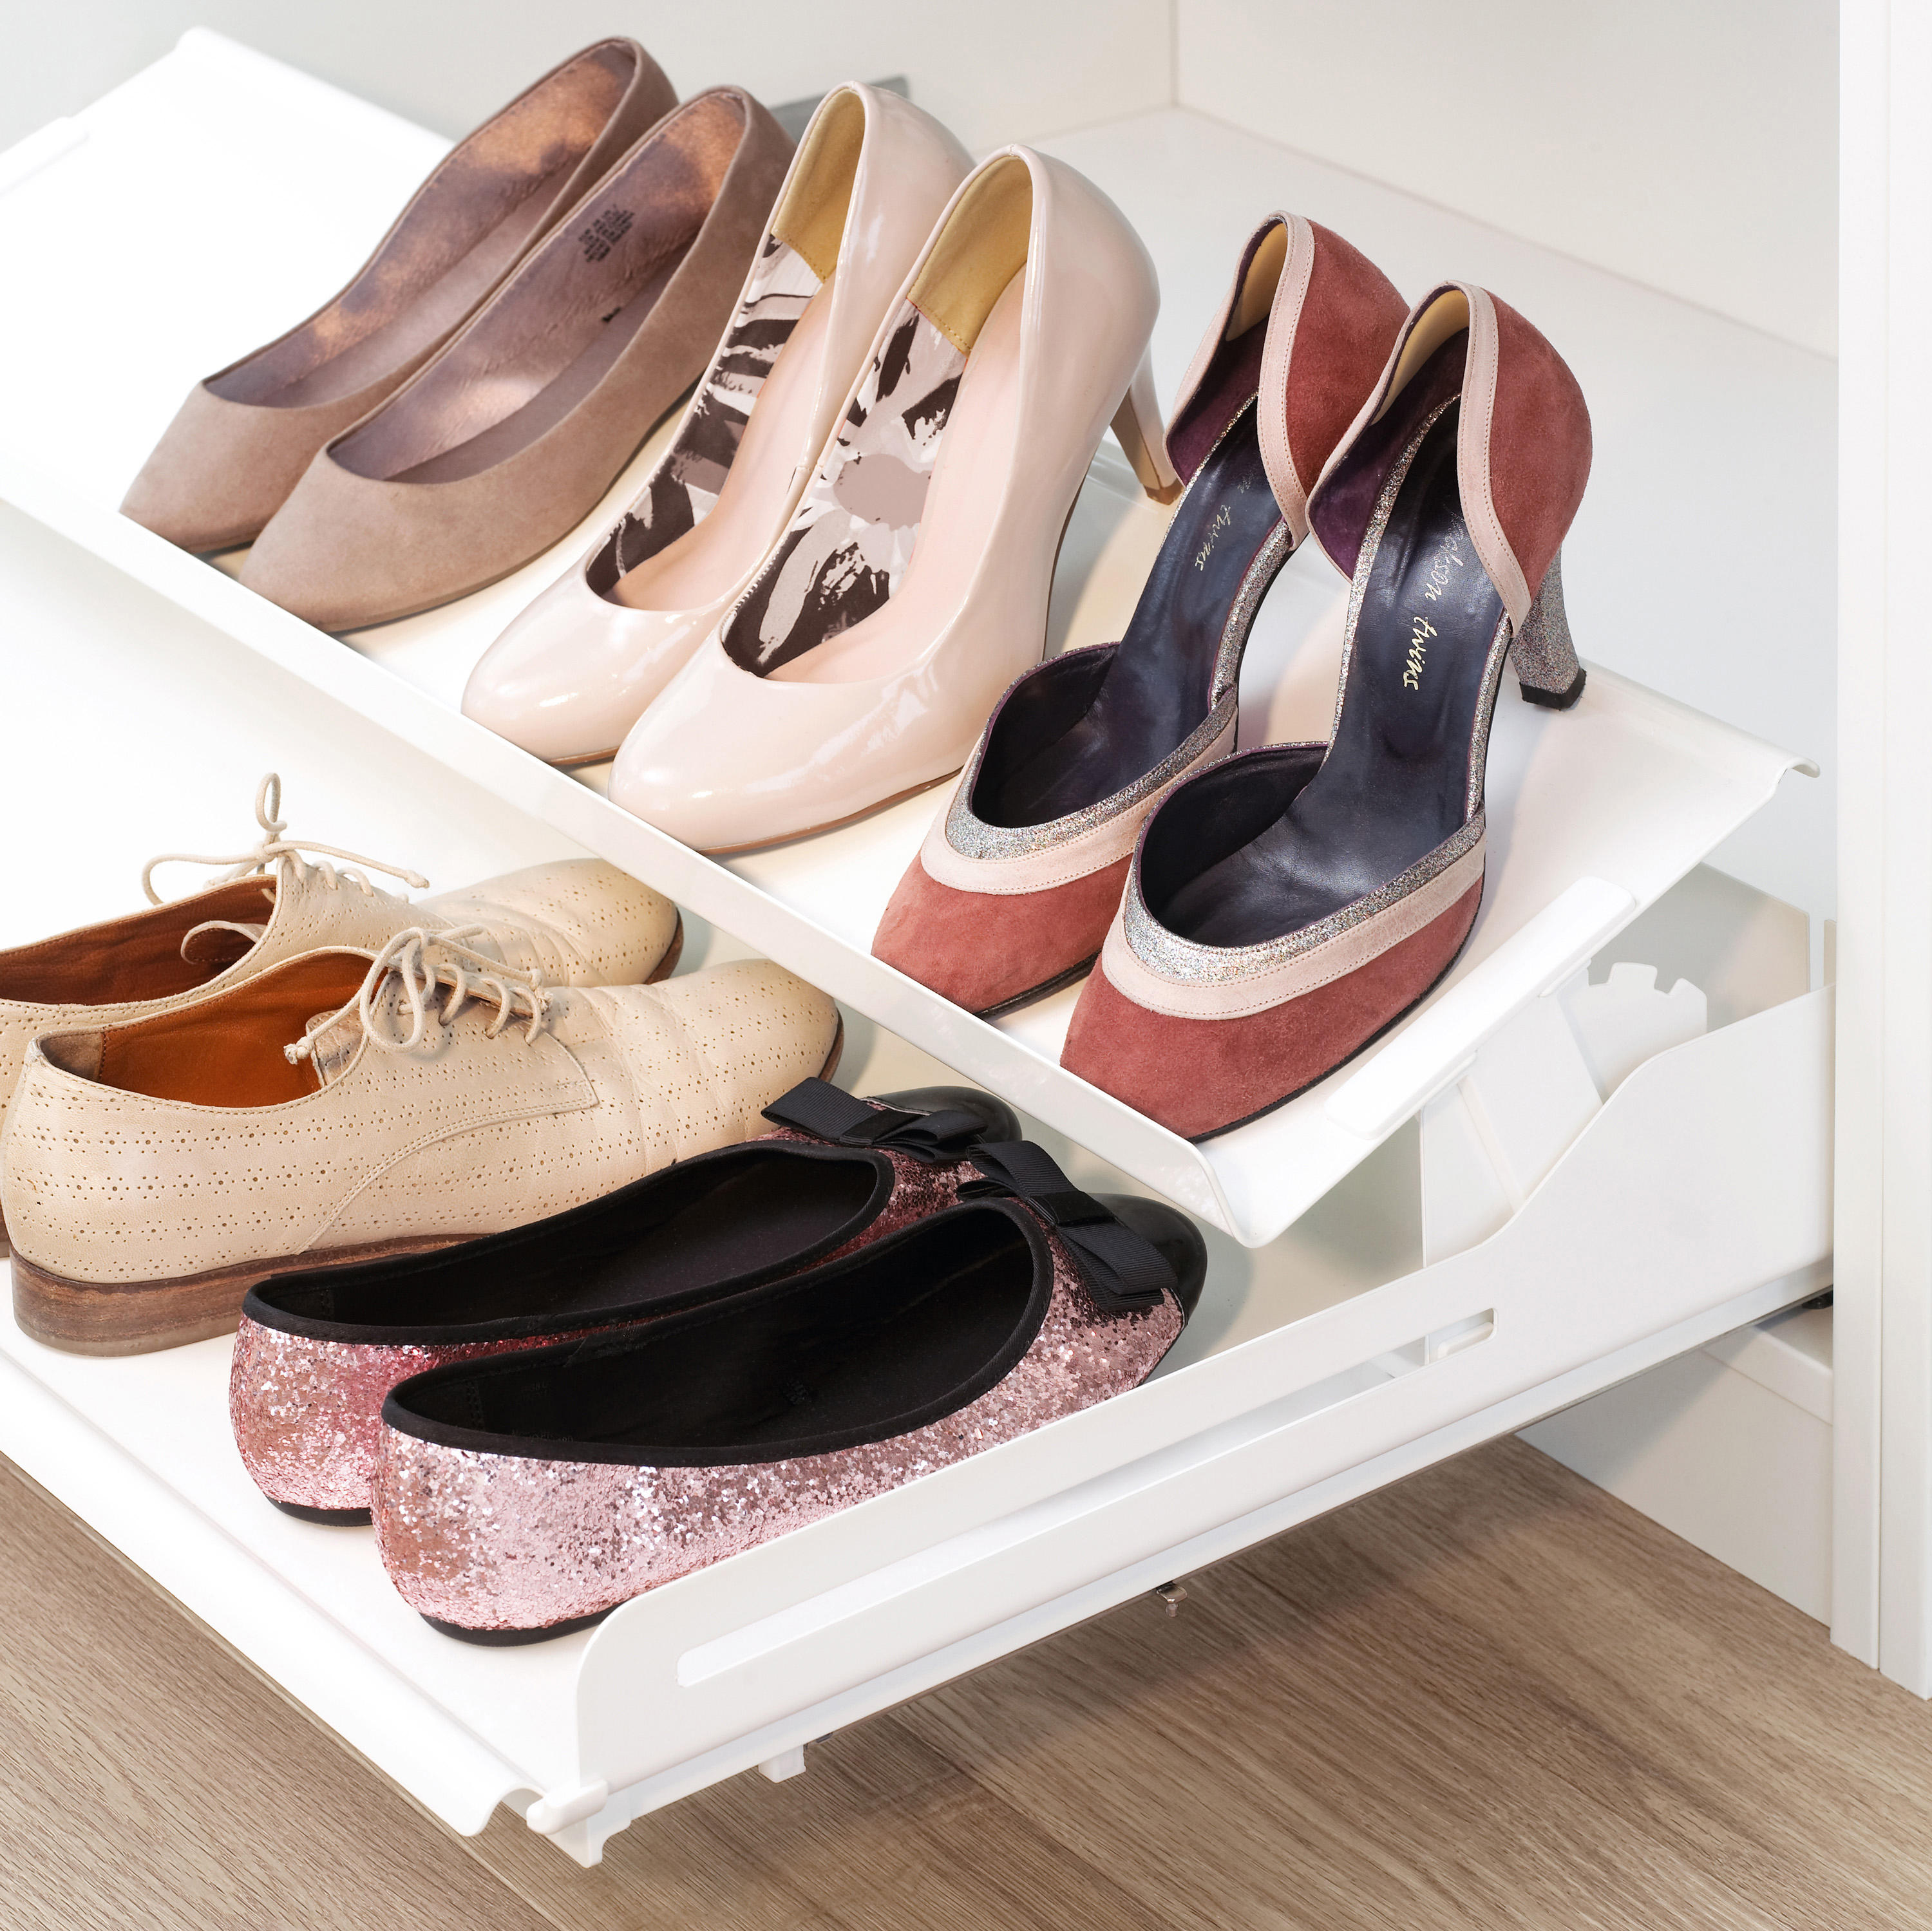 Extendo Shoe shelf & designer furniture | Architonic